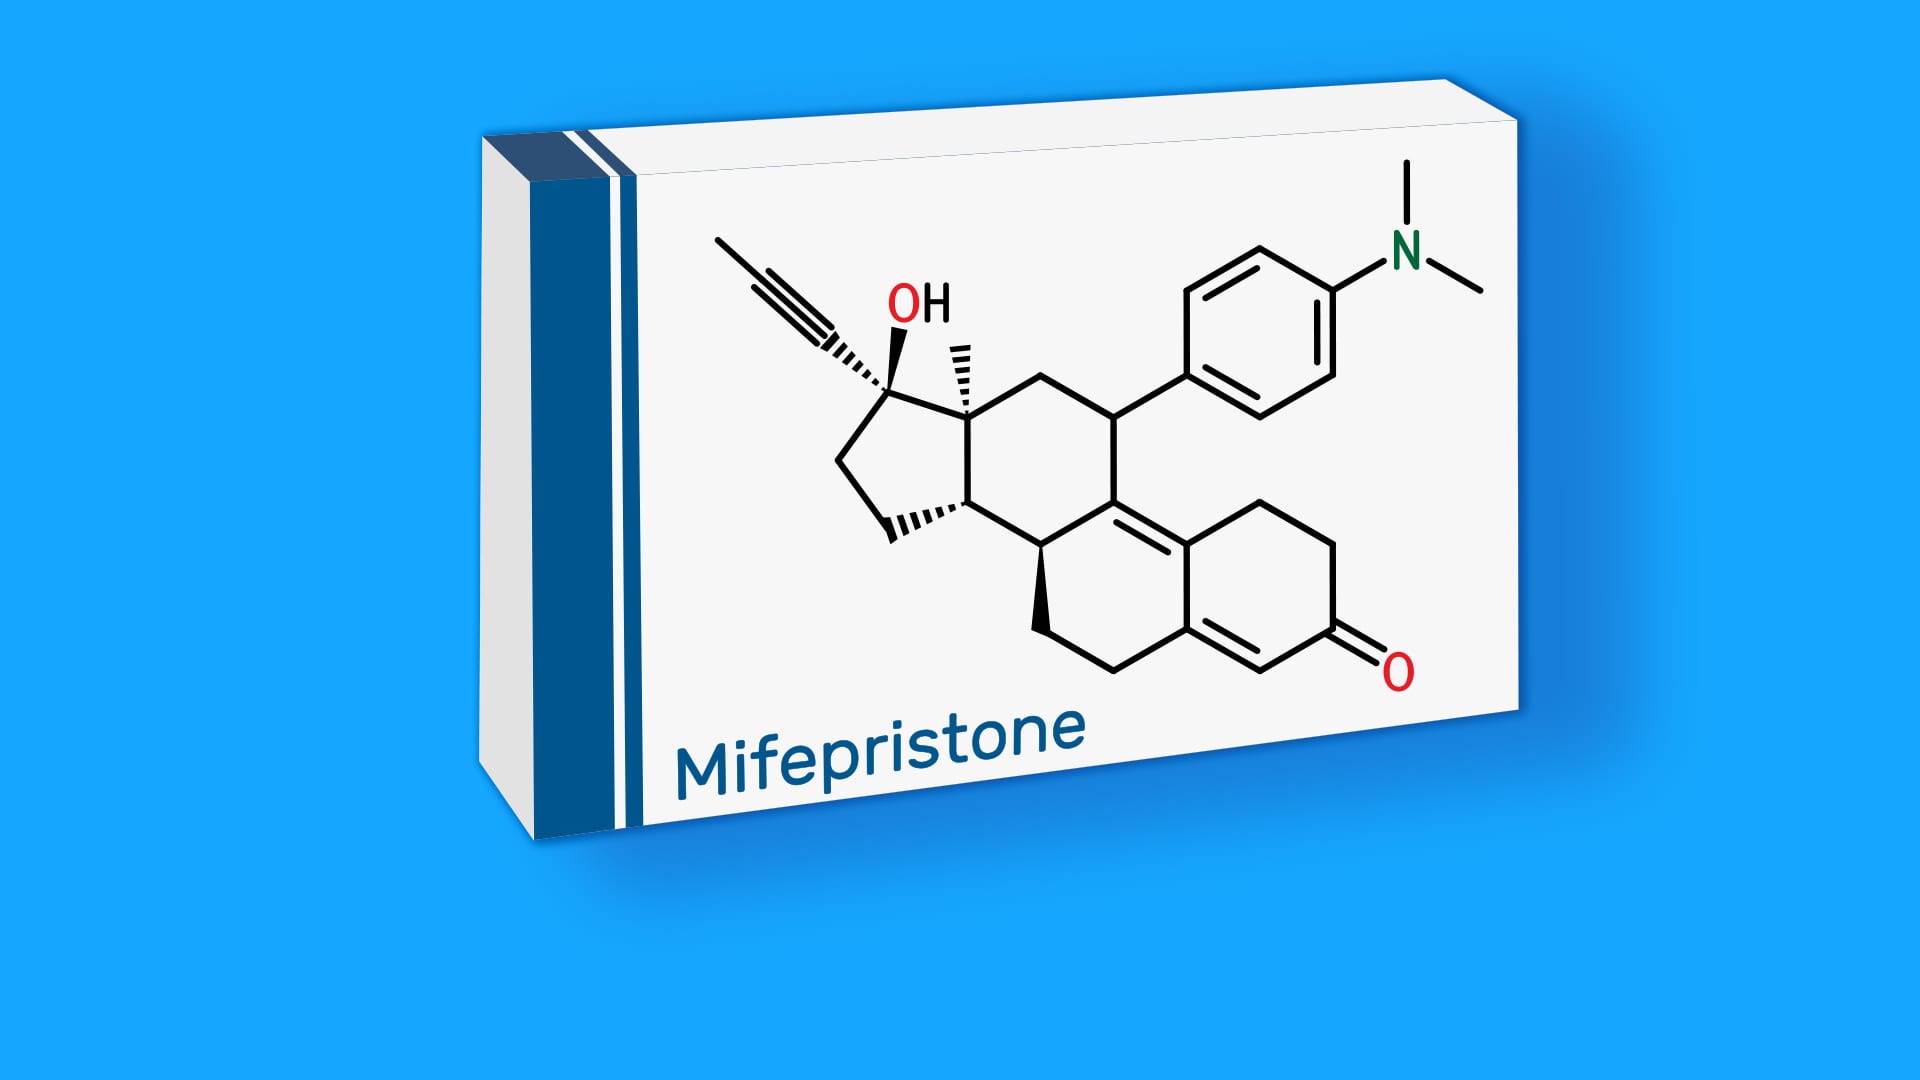 illustration of mifepristone, as part of a medication abortion regimen